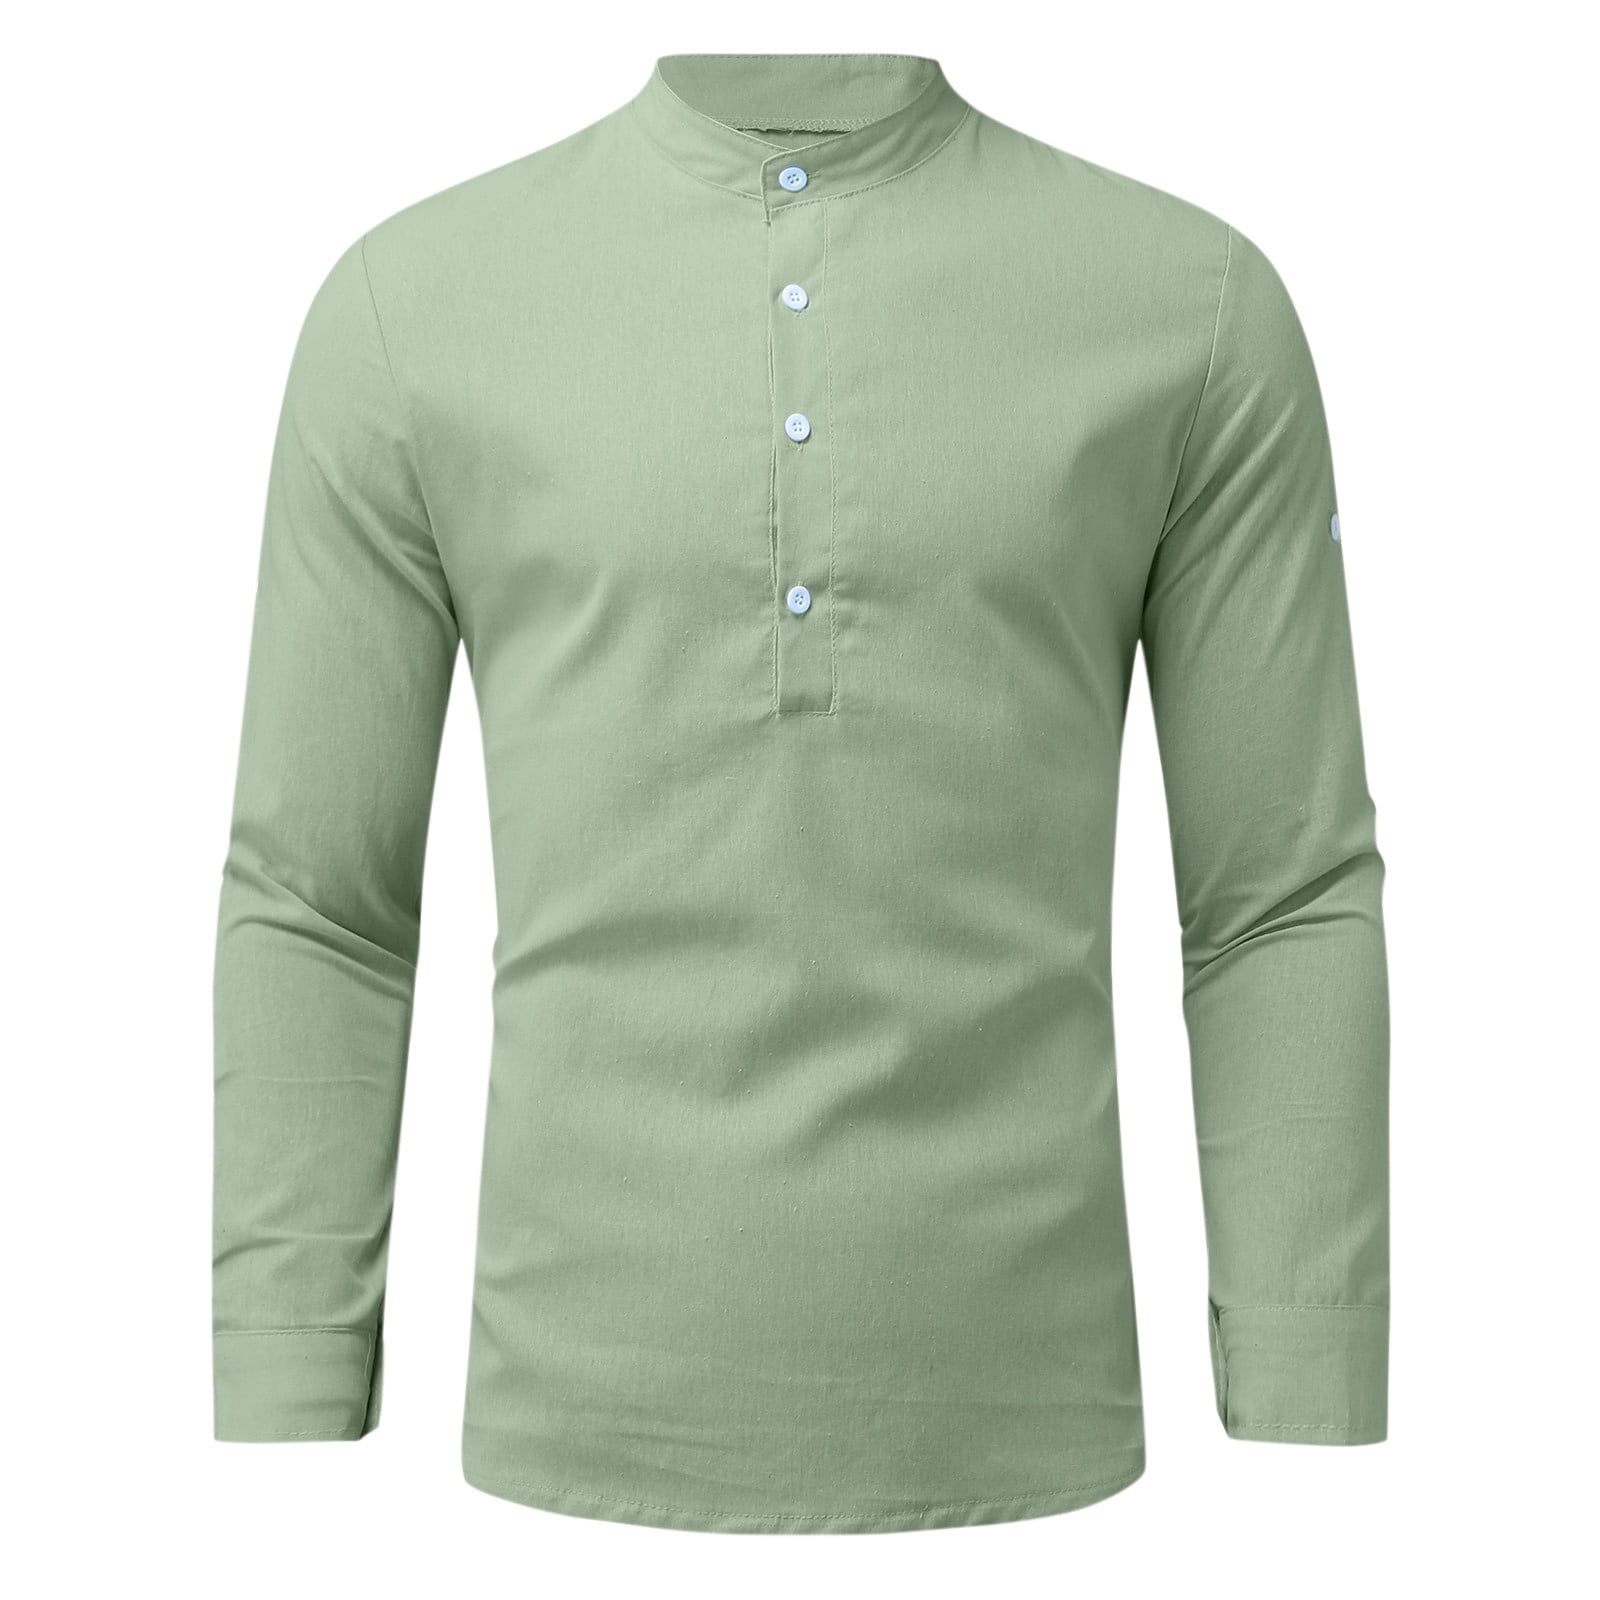 ZZWXWB Long Sleeve For Men Men Cotton Linen Shirt Pullover Casual